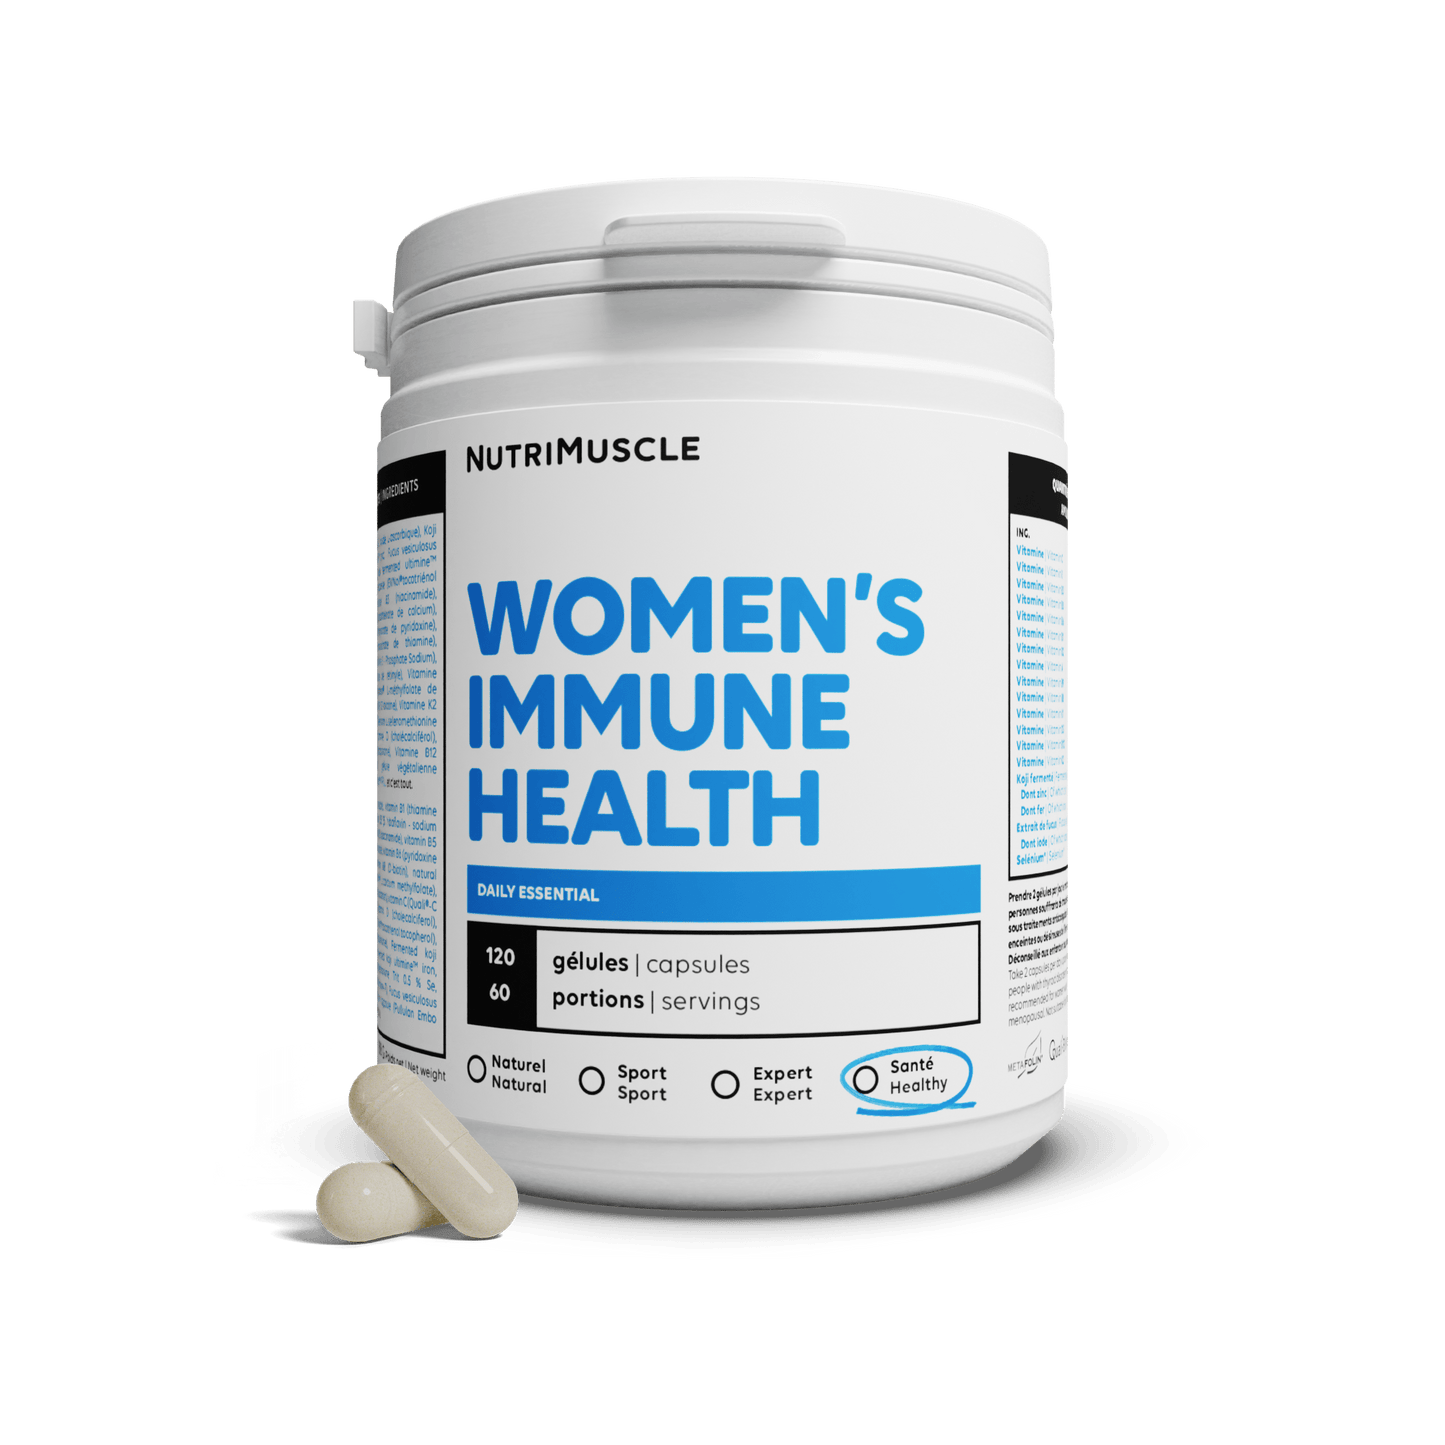 Nutrimuscle Vitamines 120 gélules Women's Immune Health